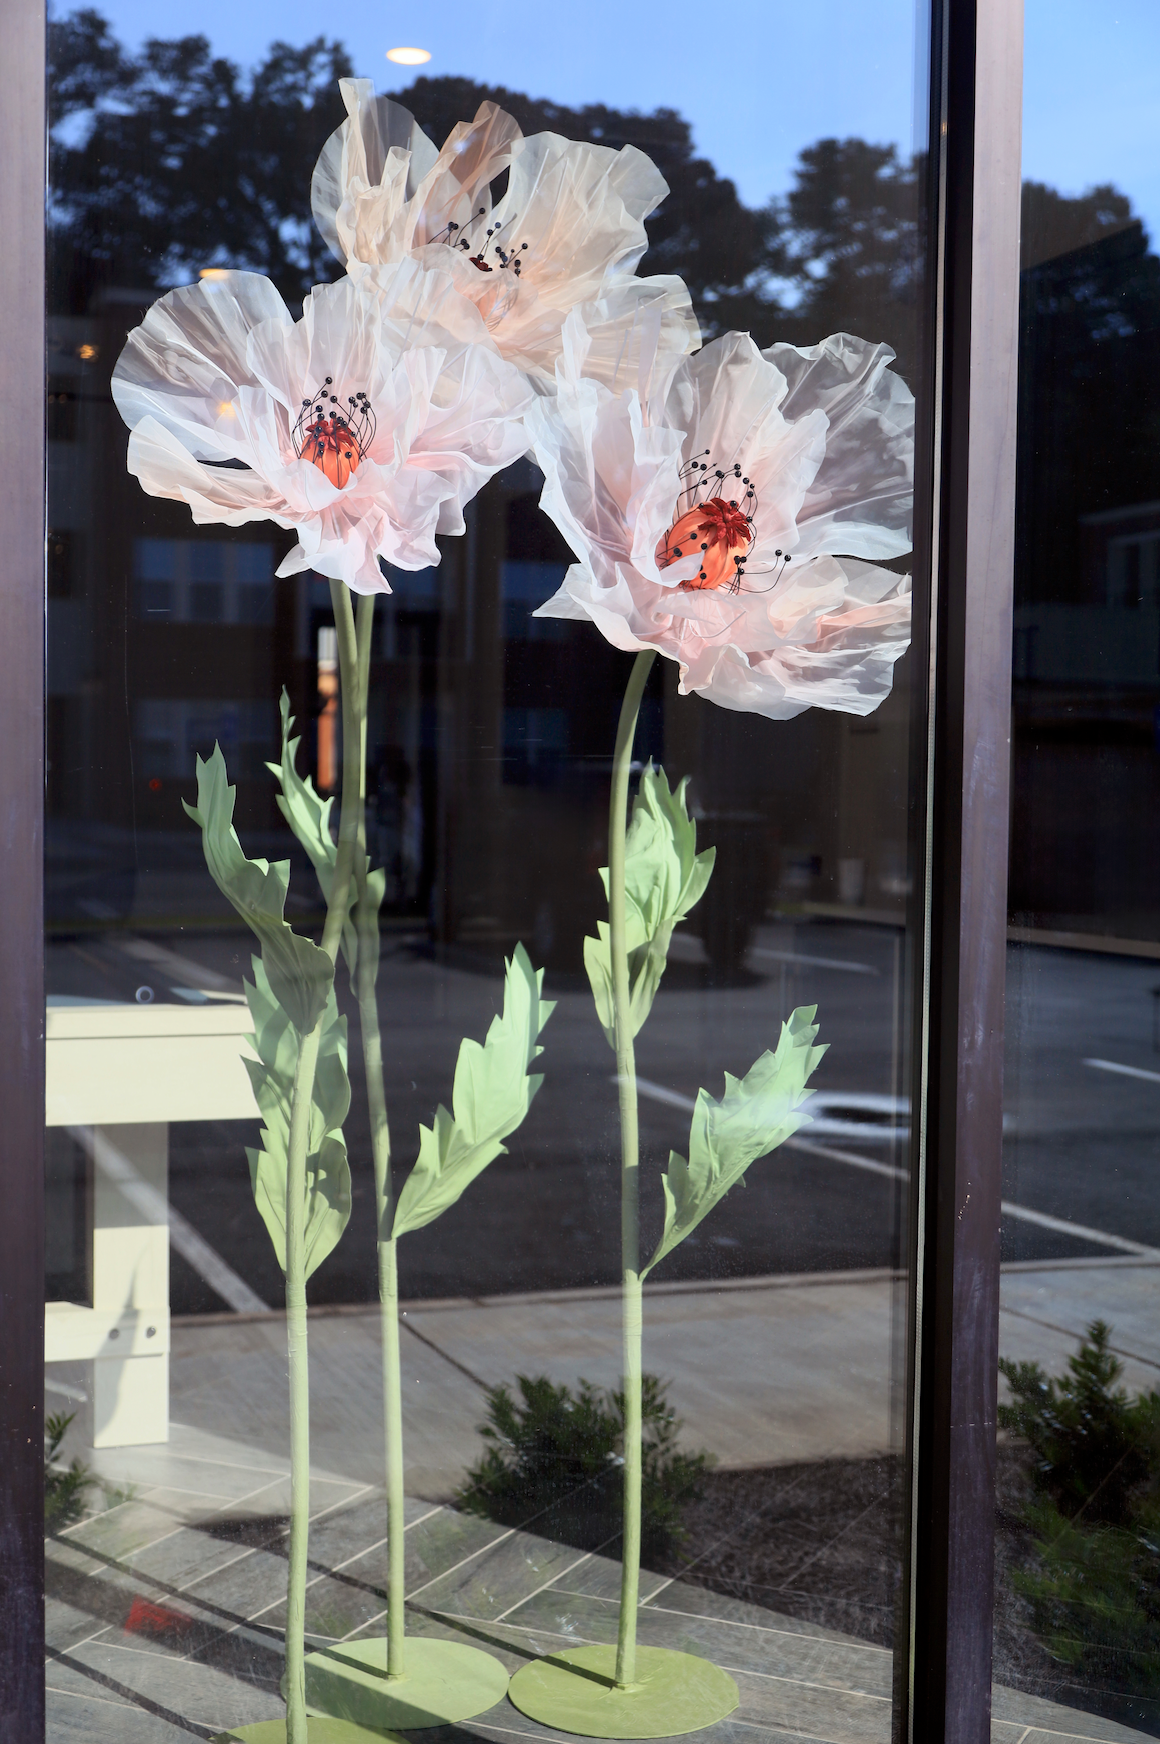 Giant Flowers for storefront decor